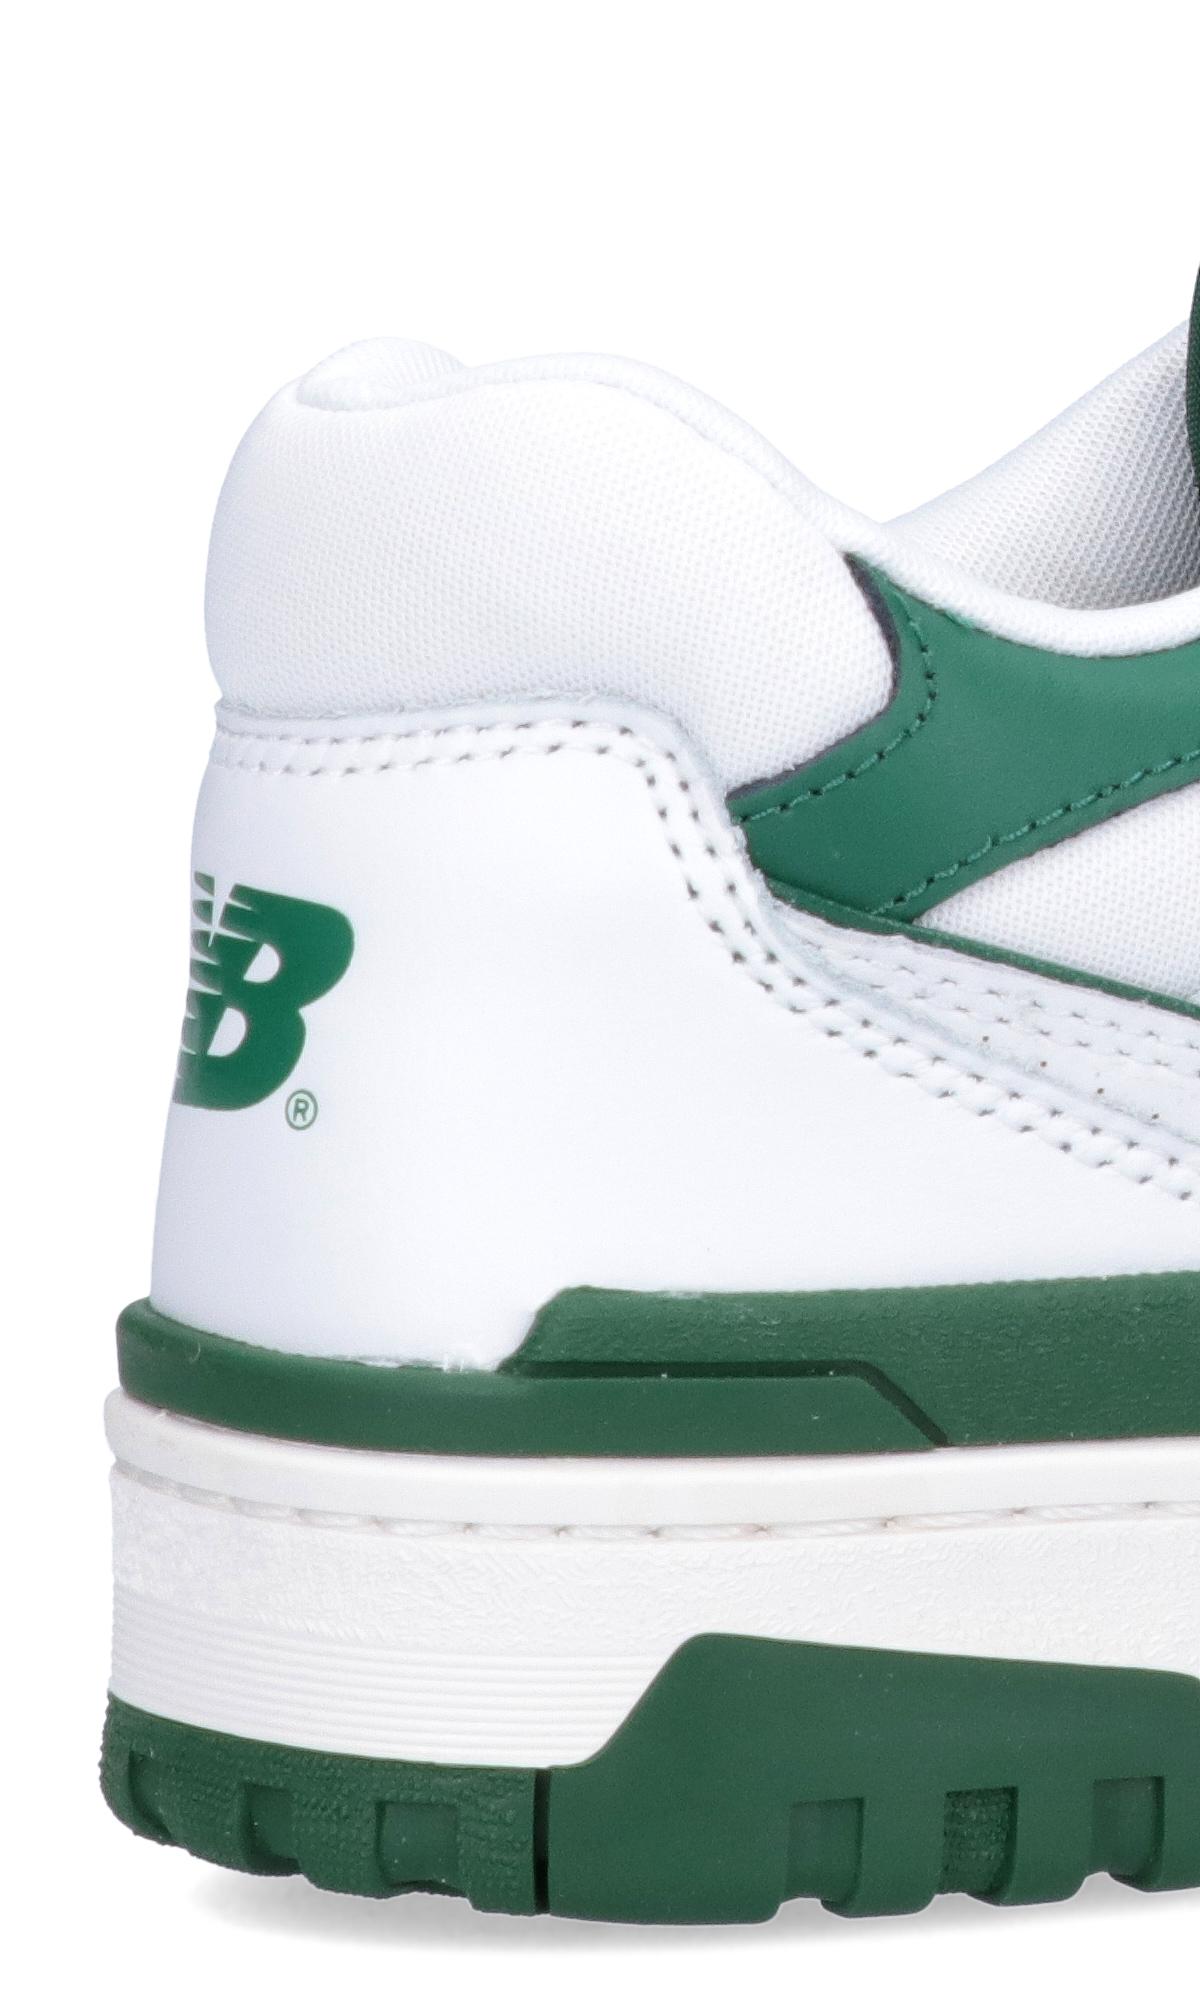 New Balance bb 550 White Green Sneakers for Men